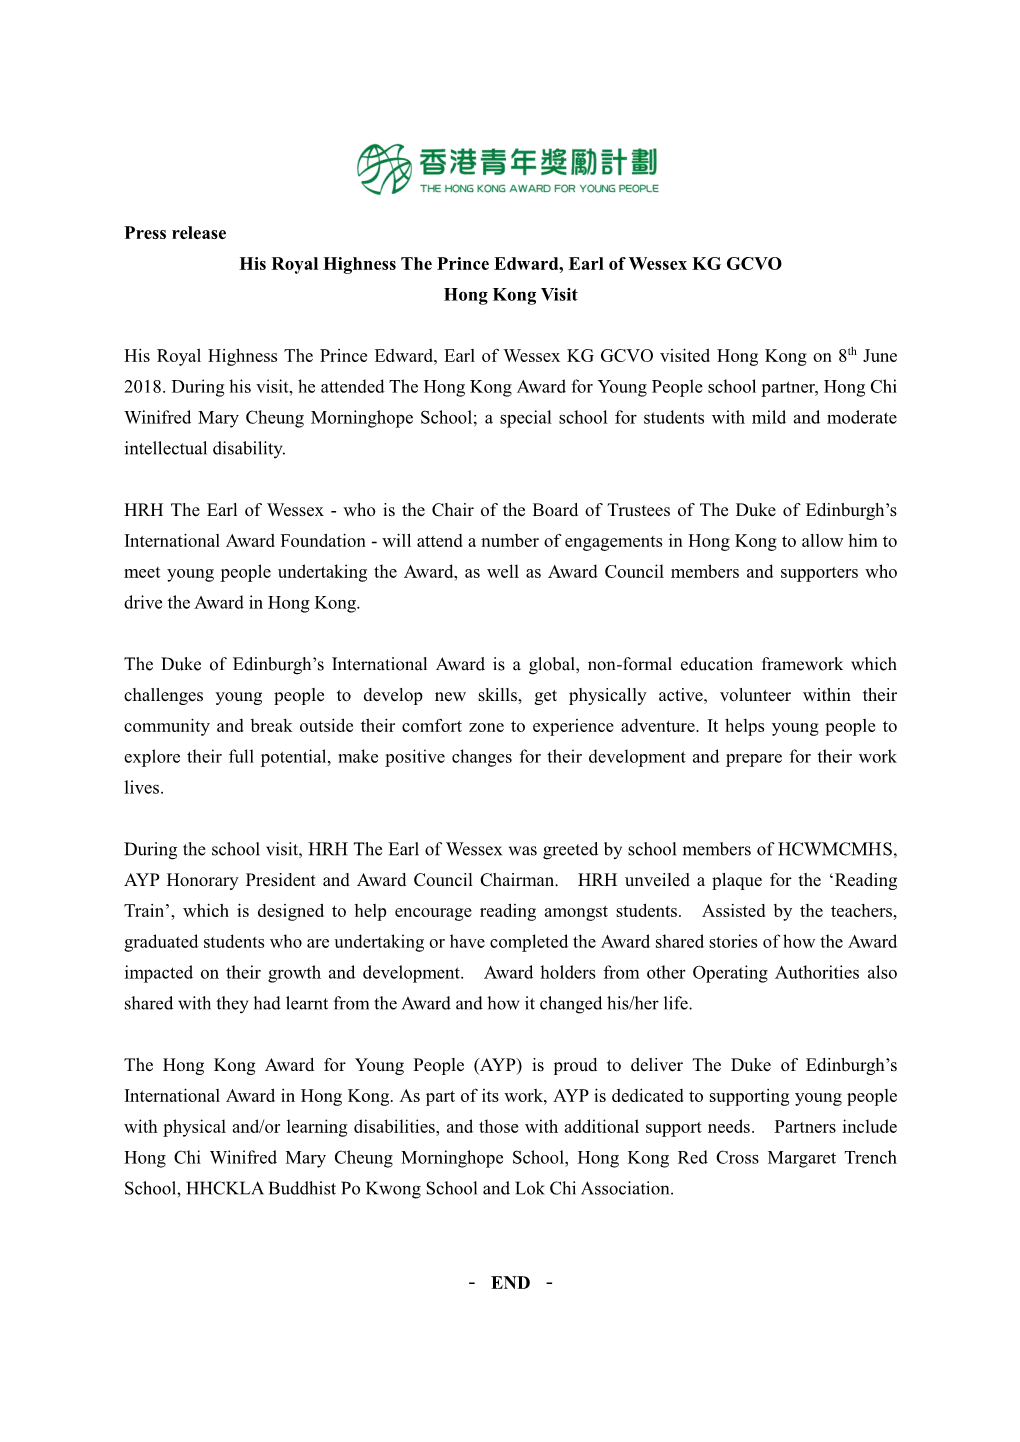 Press Release His Royal Highness the Prince Edward, Earl of Wessex KG GCVO Hong Kong Visit